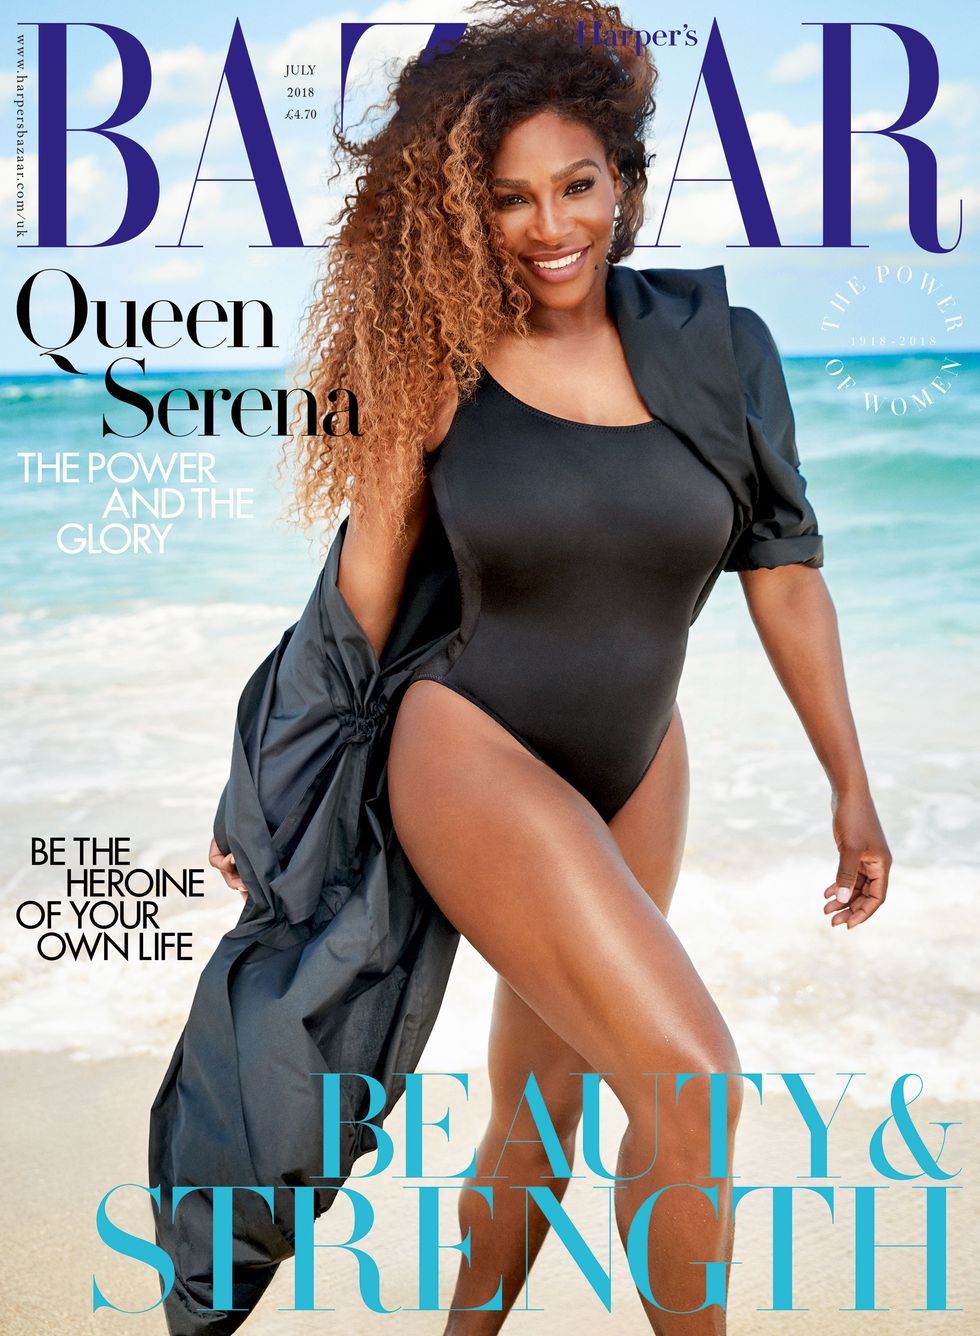 Serena Williams Interview Harpers Bazaar July 2018 Issue 4819